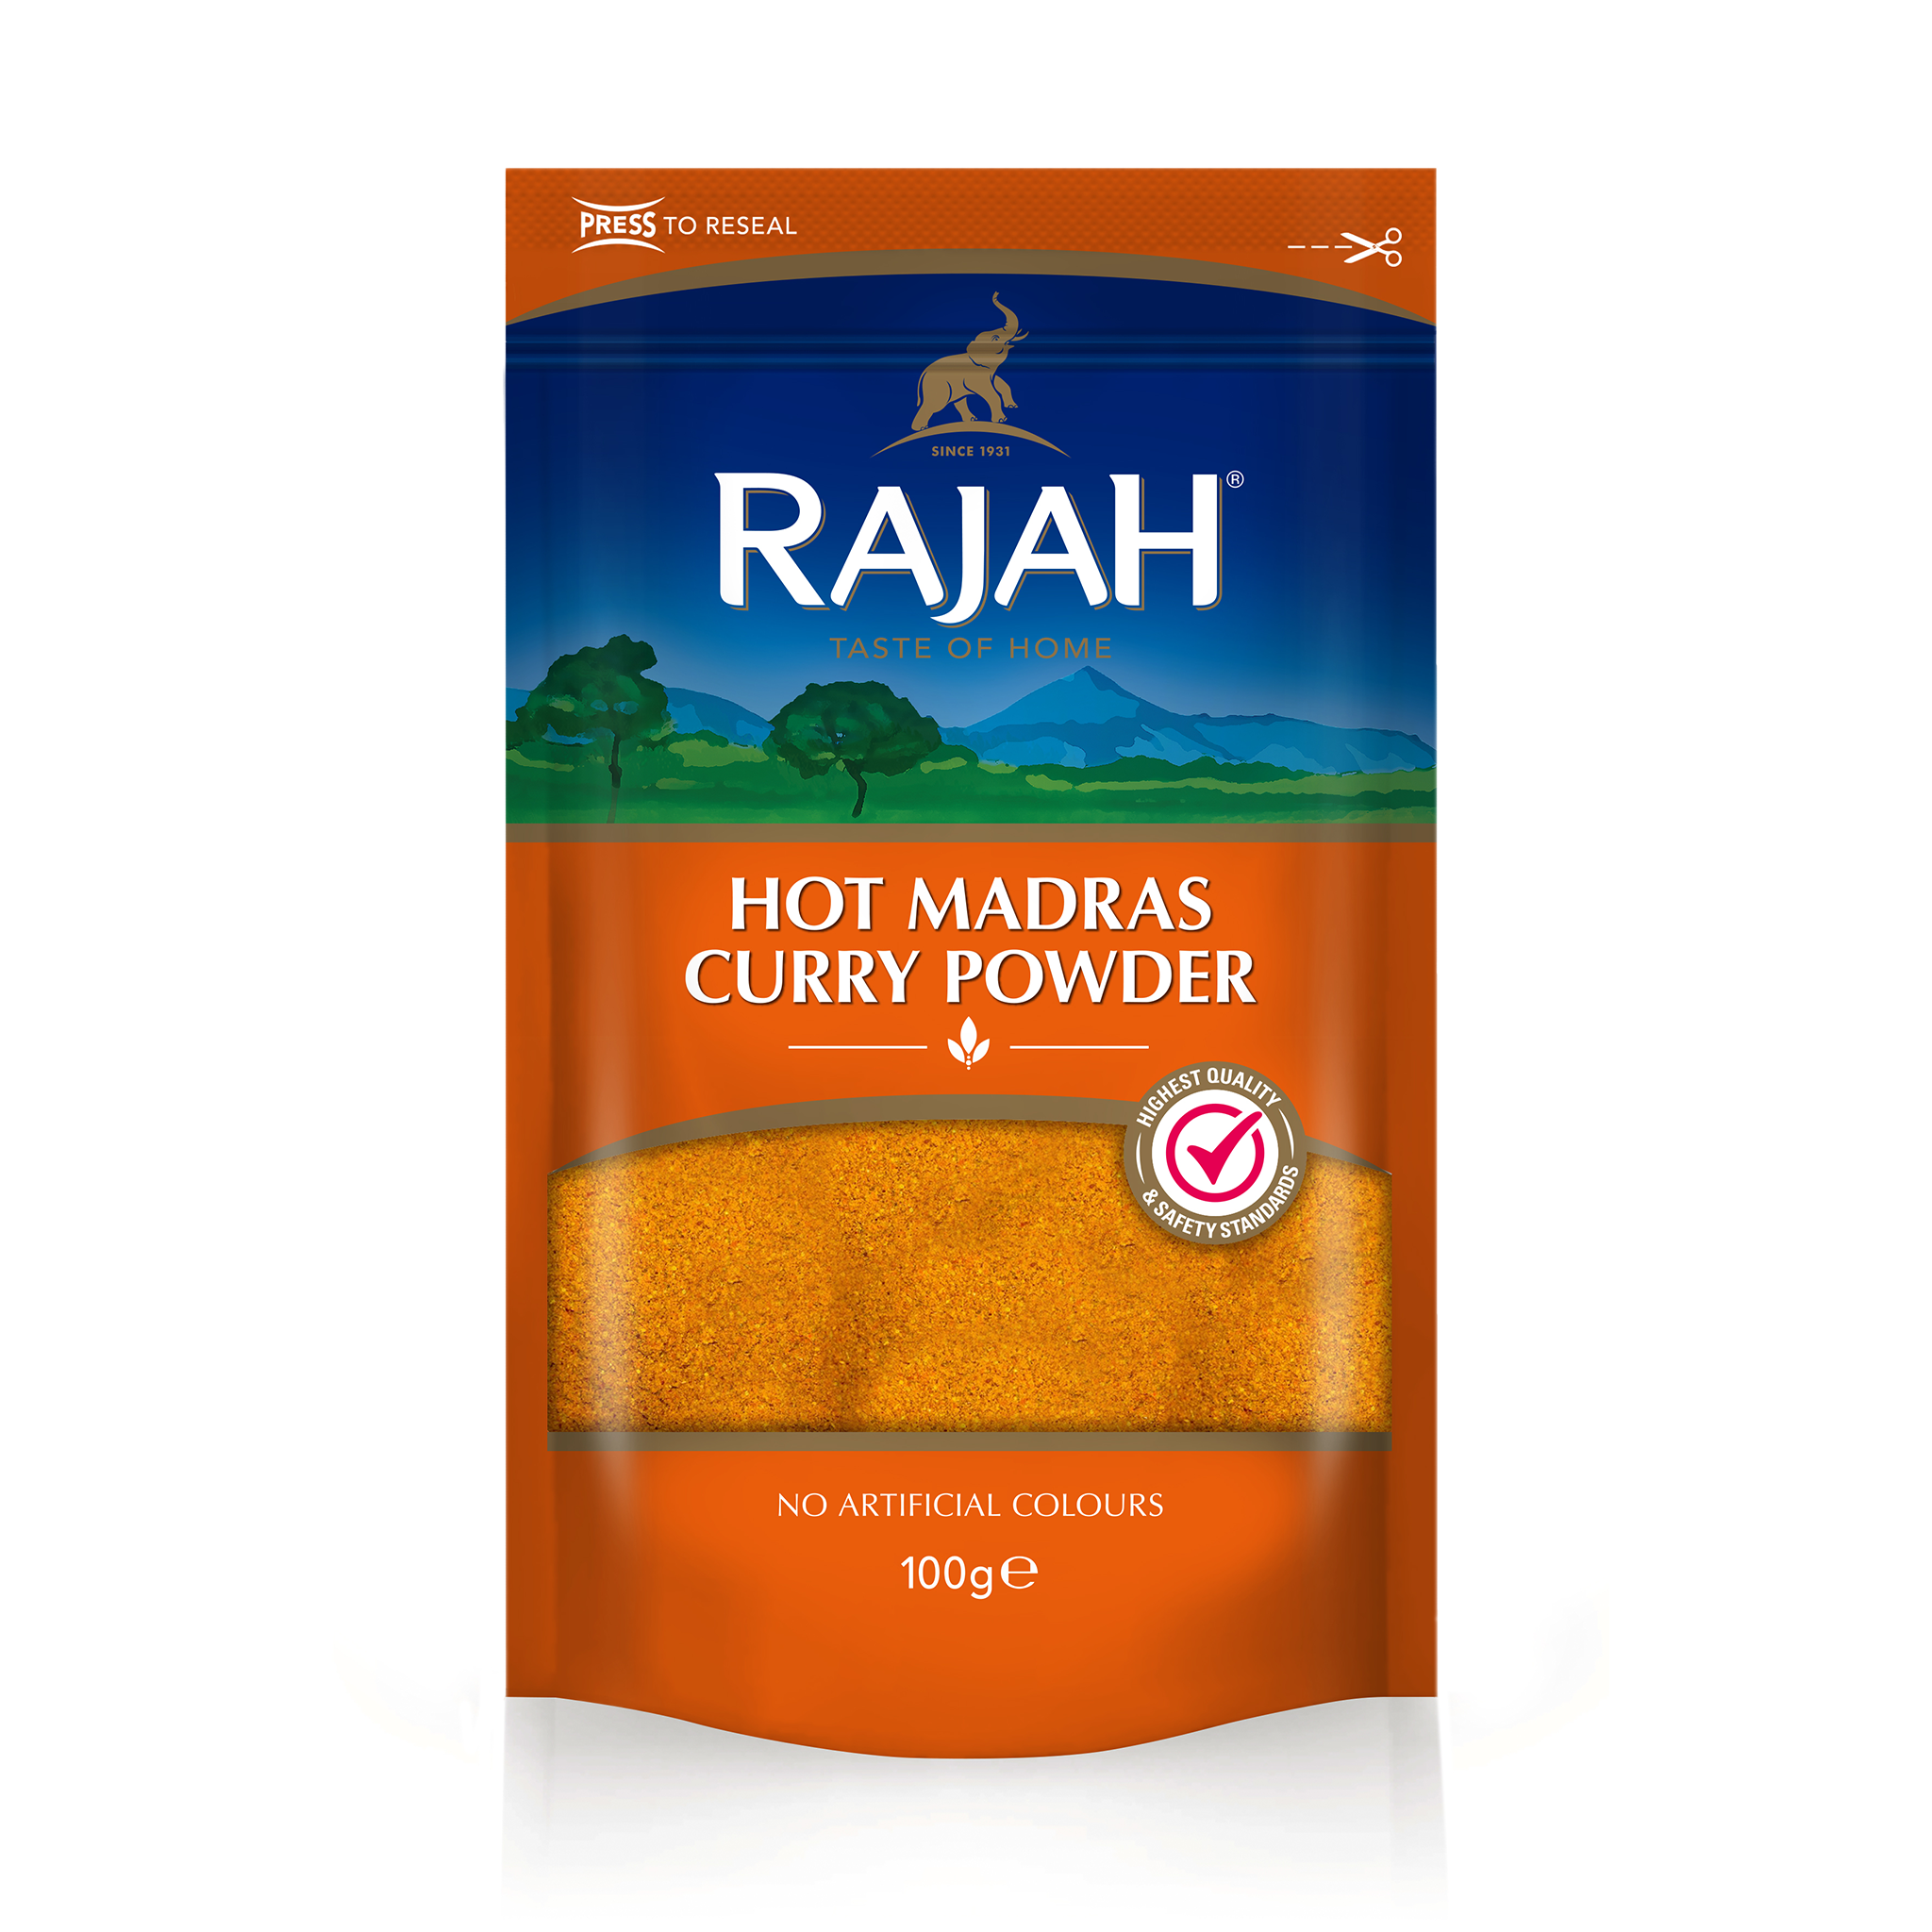 Hot Madras Curry Powder Seasoning Spice Mix 100g by Rajah